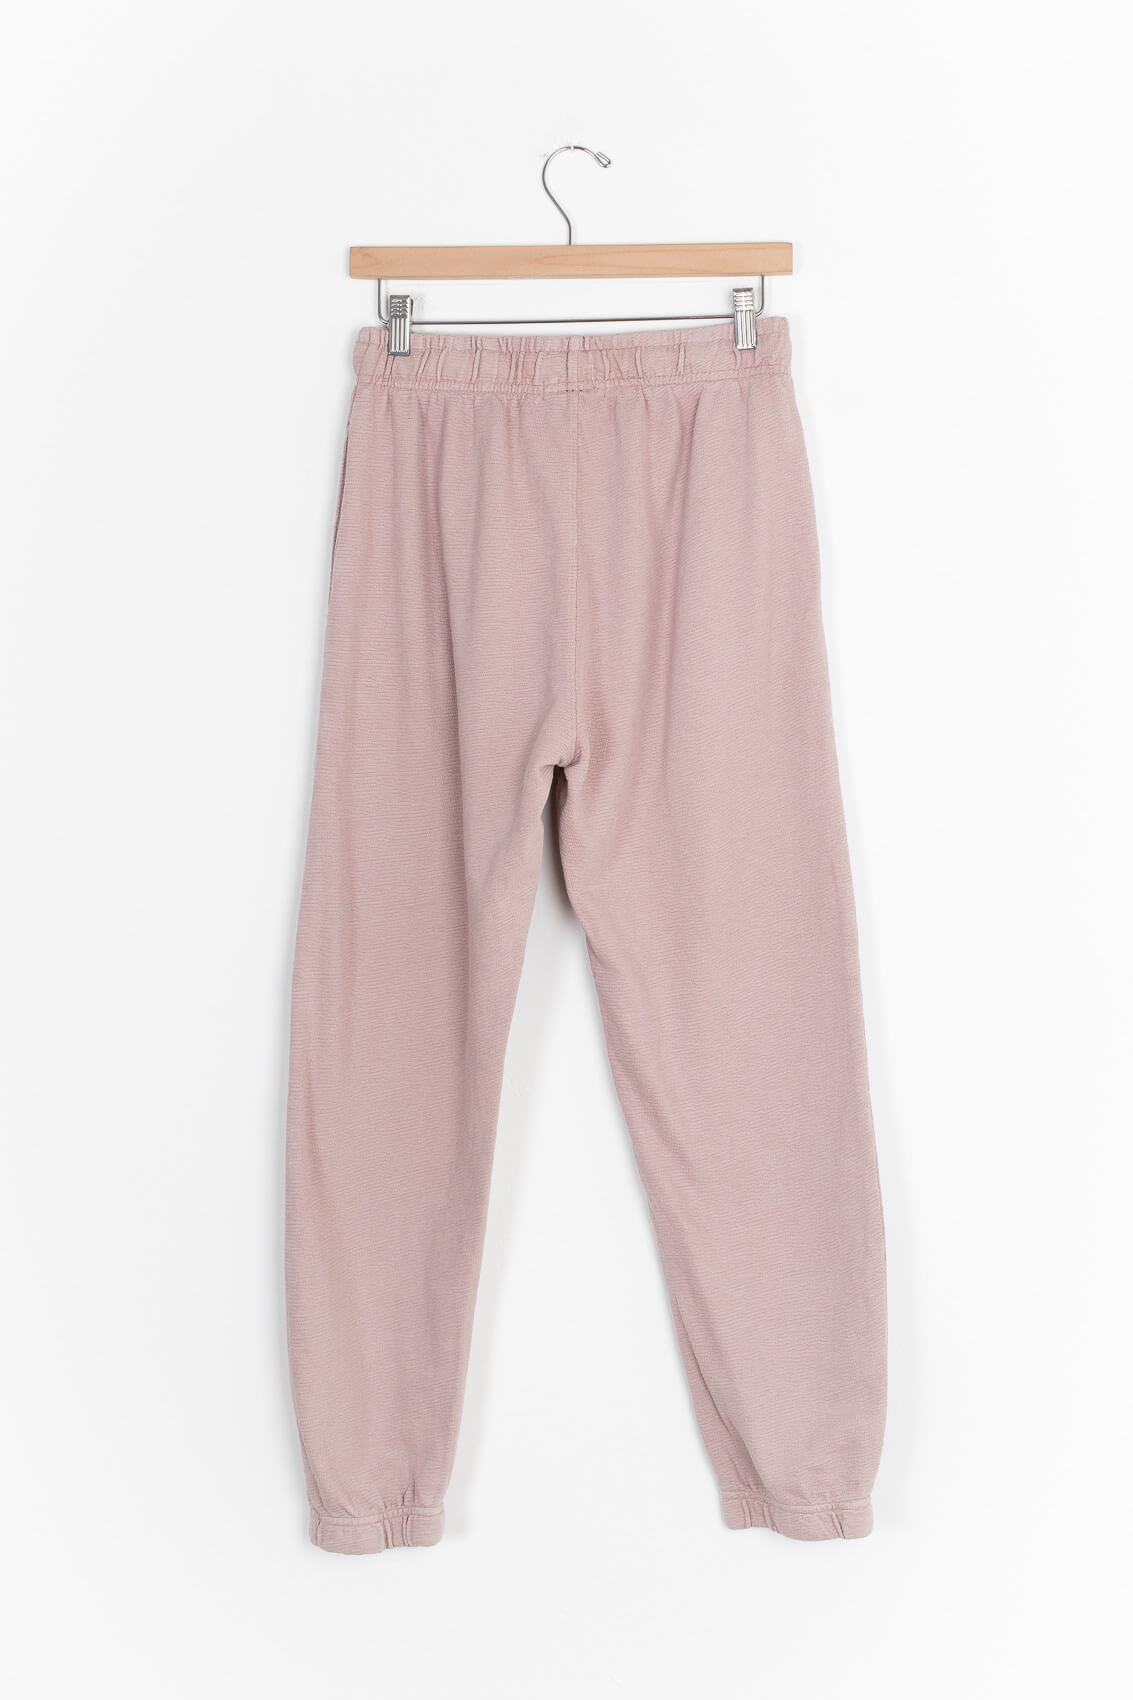 light pink sweatpants